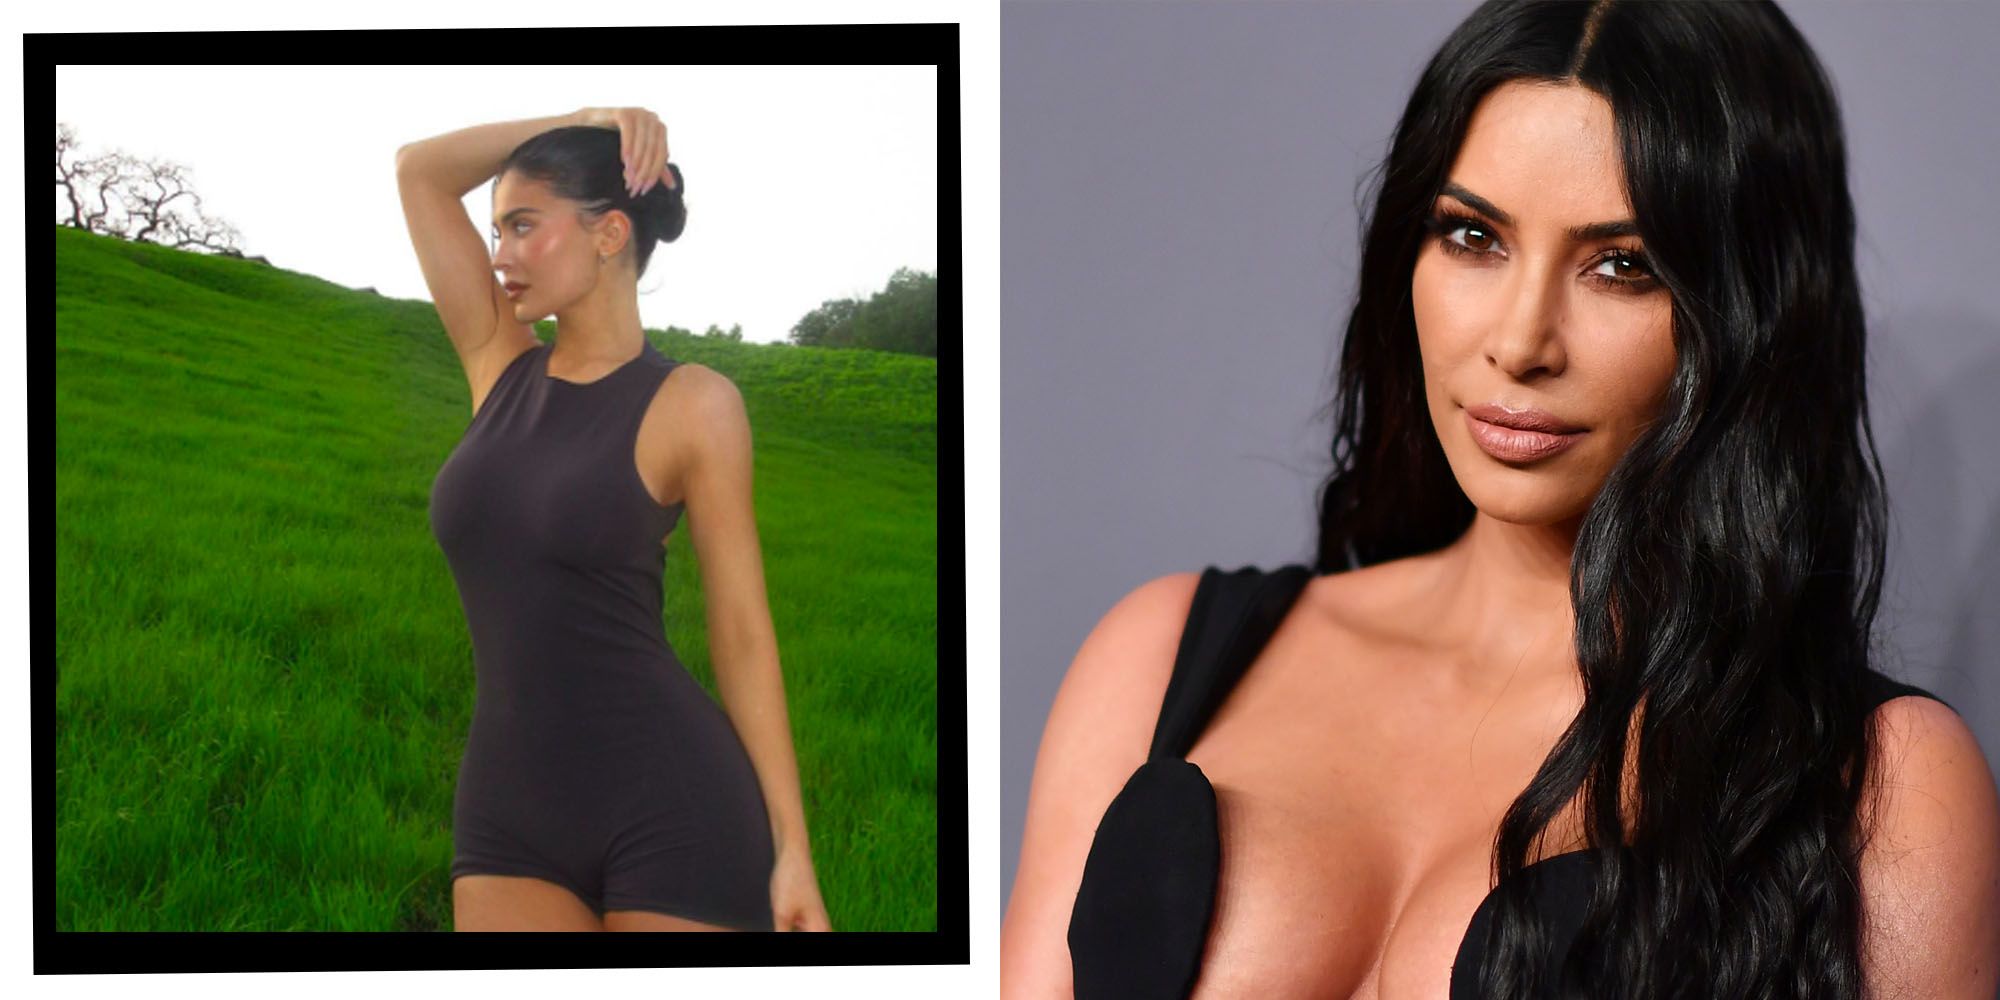 Kylie Jenner Shades Kim Kardashian On Latest Instagram Post